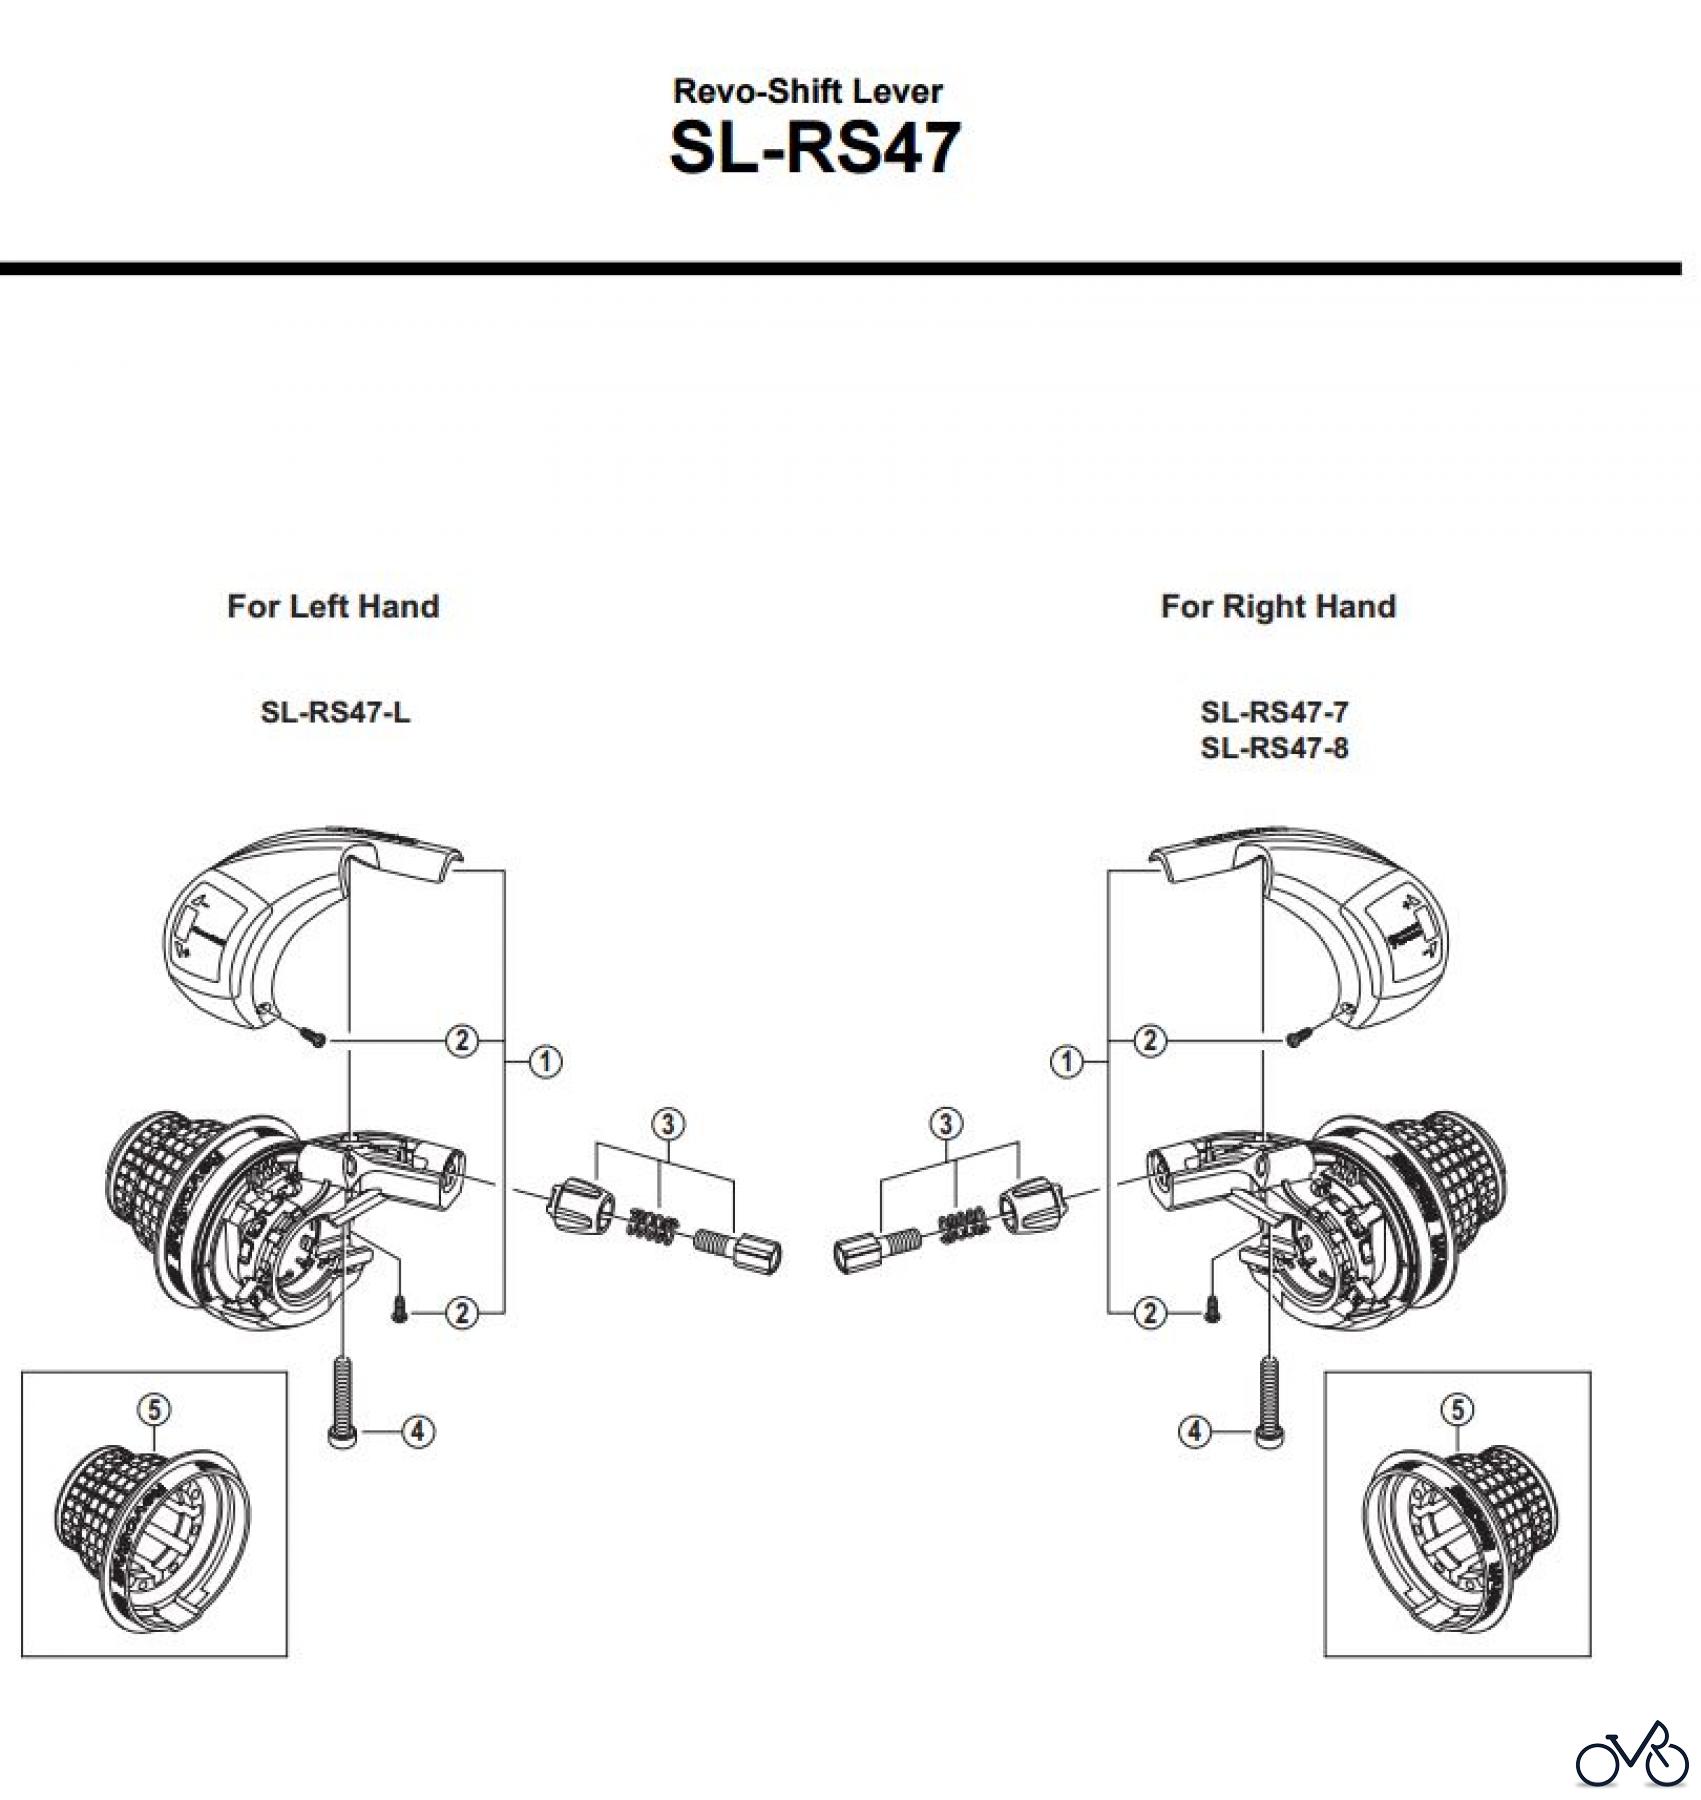  Shimano SL Shift Lever - Schalthebel SL-RS47 -3366A  Revo-Shift Lever